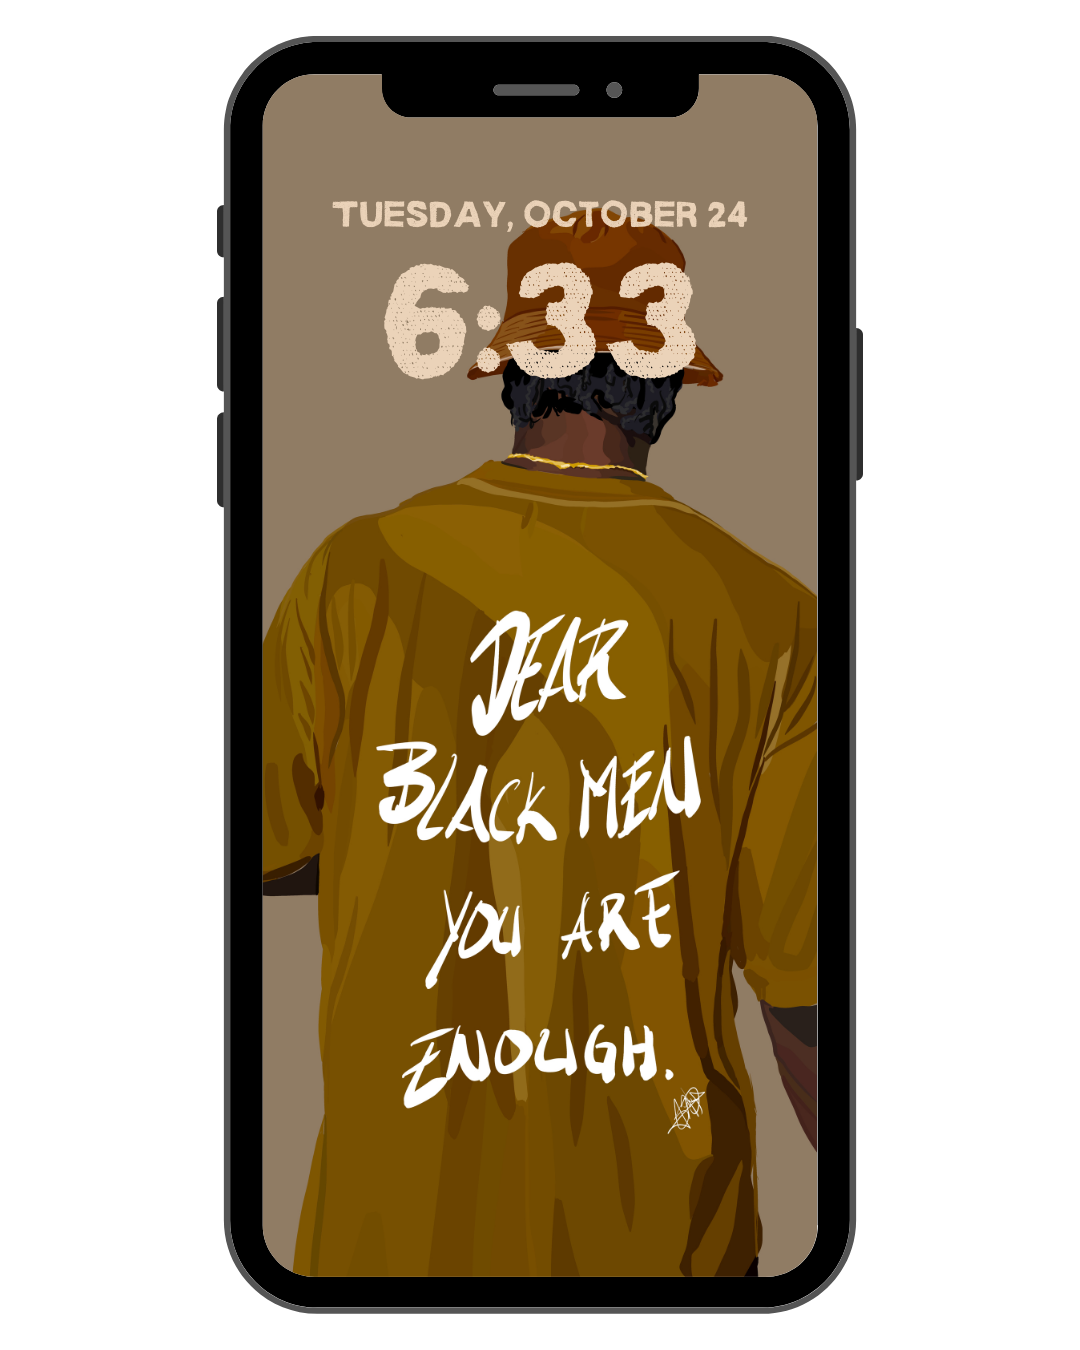 Dear Black Men - Phone Screensaver